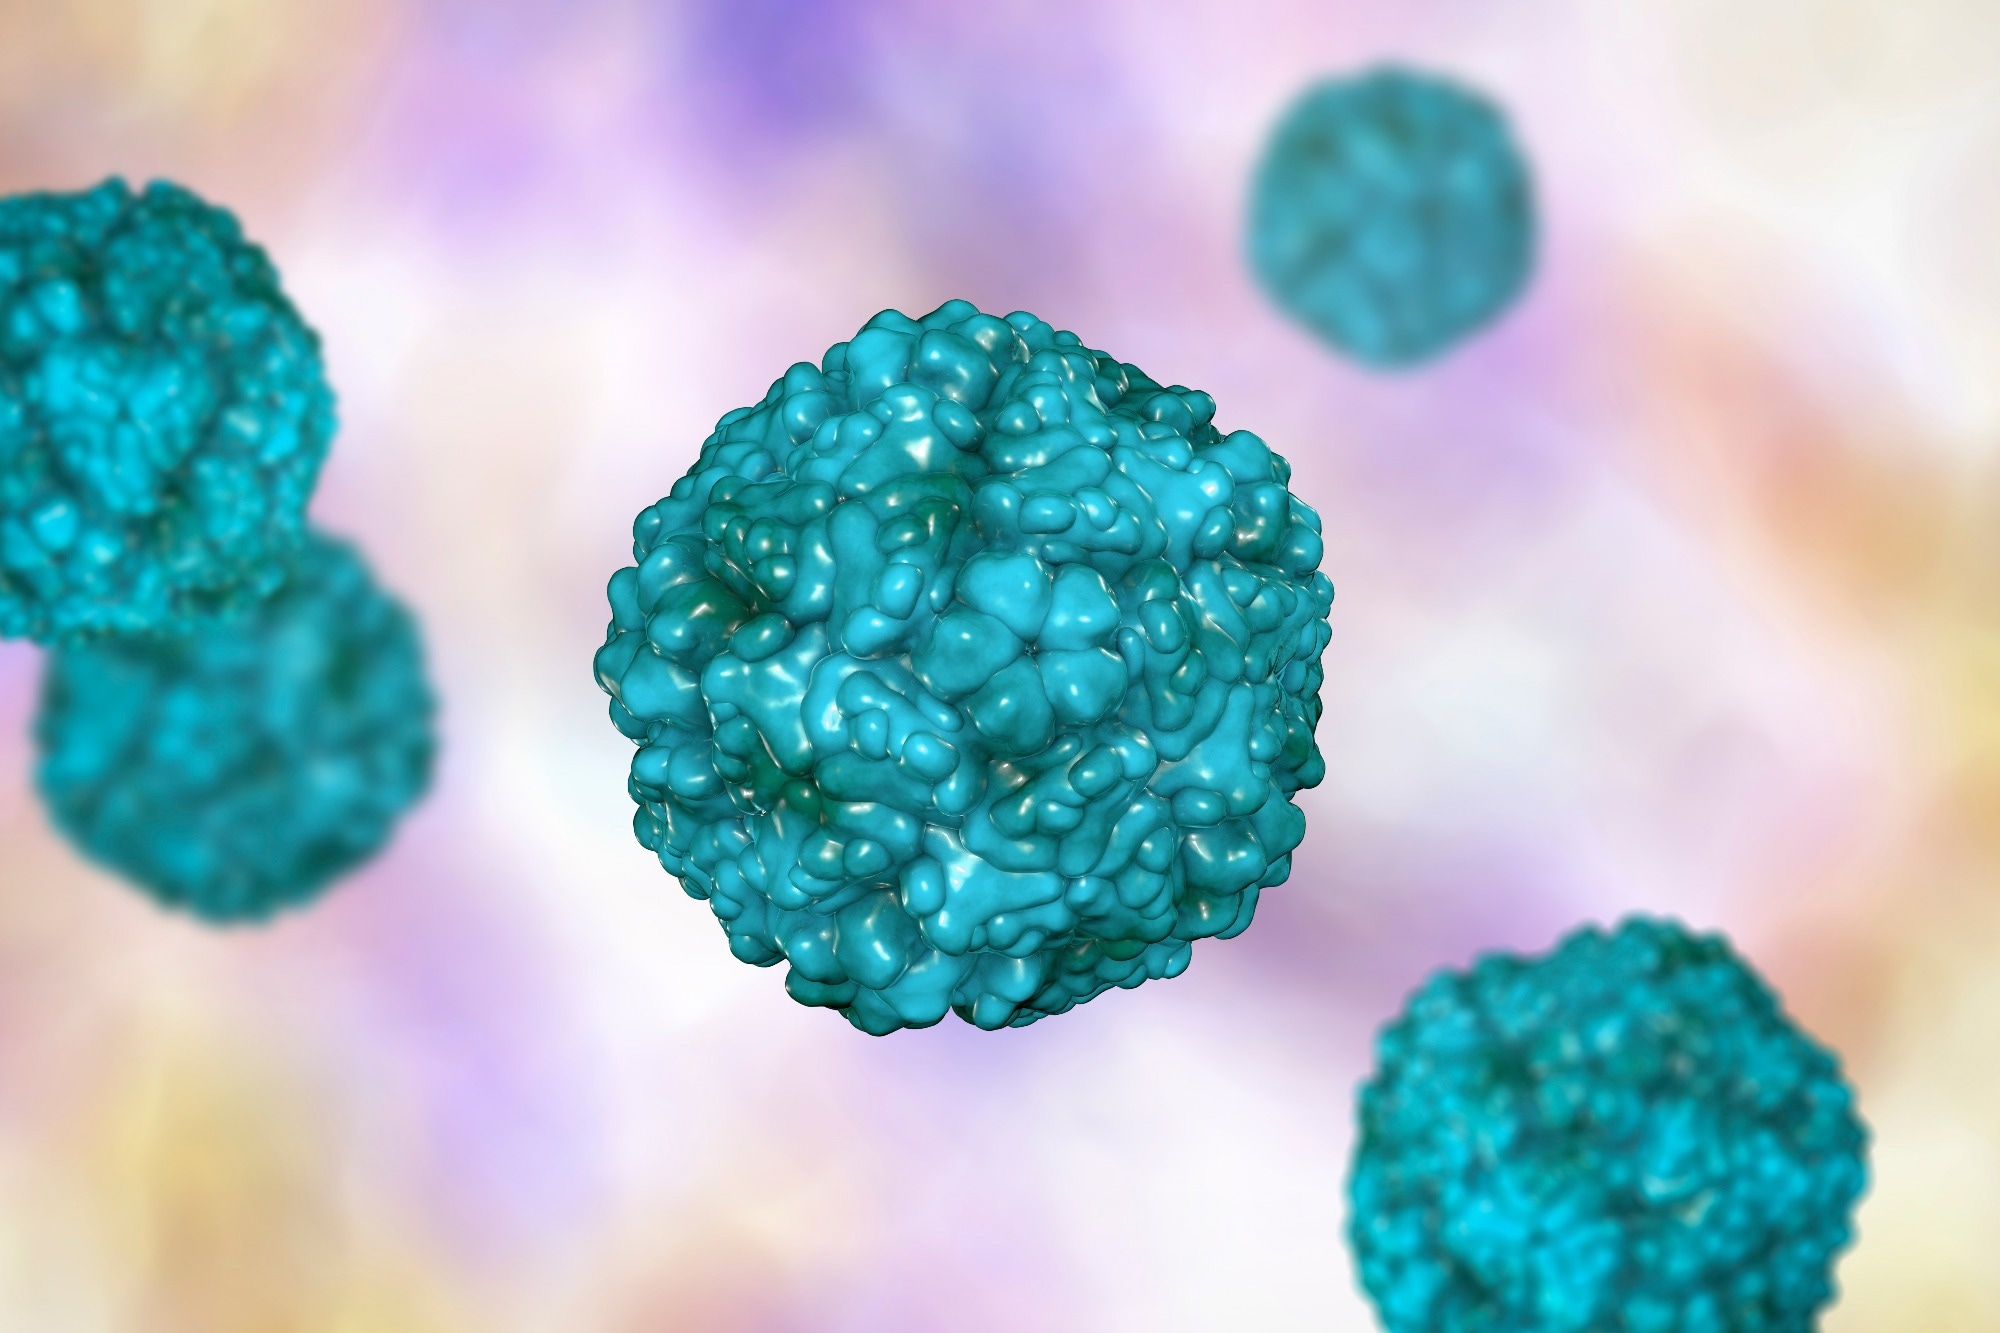 Study: Changes in transmission of Enterovirus D68 (EV-D68) in England inferred from seroprevalence data. Image Credit: KaterynaKon/Shutterstock.com